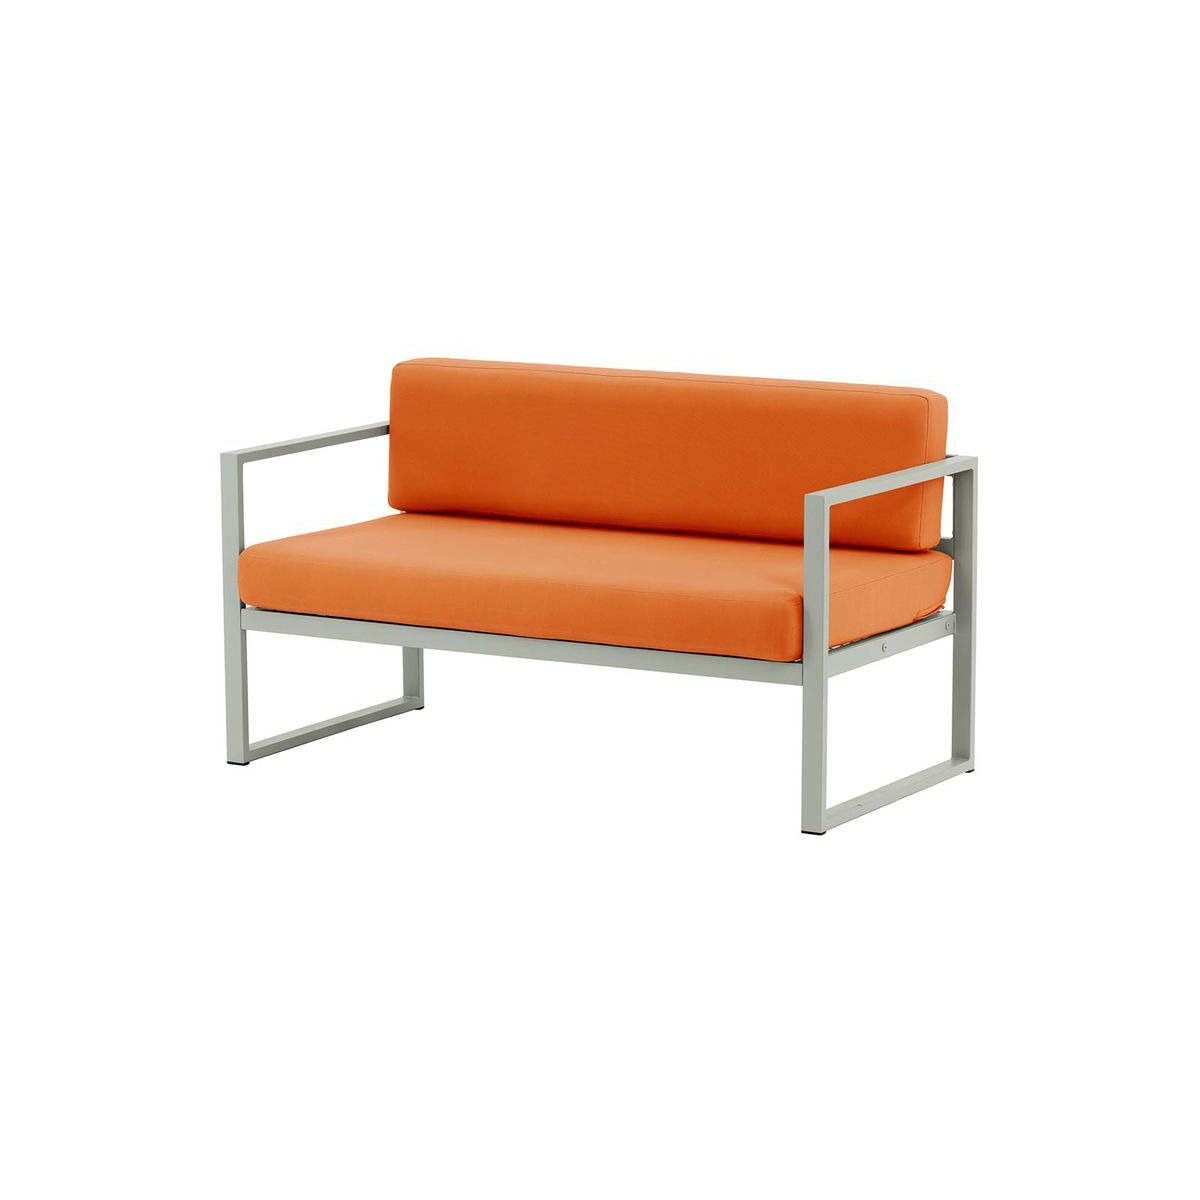 Sunset Garden 2 Seater Sofa, orange, Leg colour: grey steel - image 1